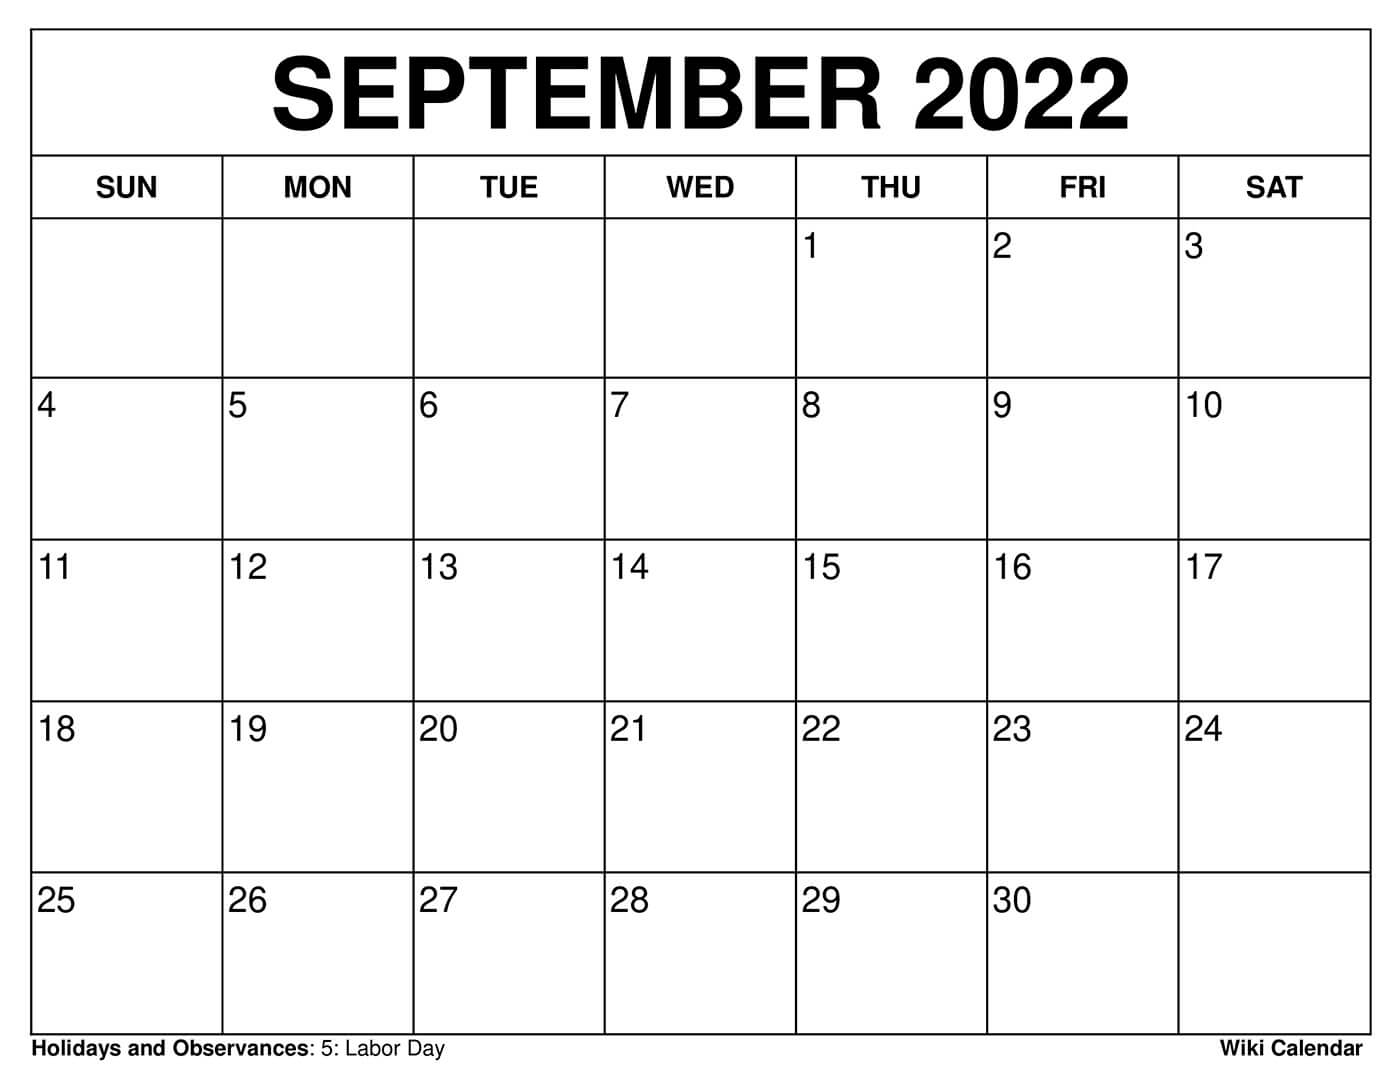 September 2022 Calendar Free Printable Free Printable September 2022 Calendars - Wiki Calendar